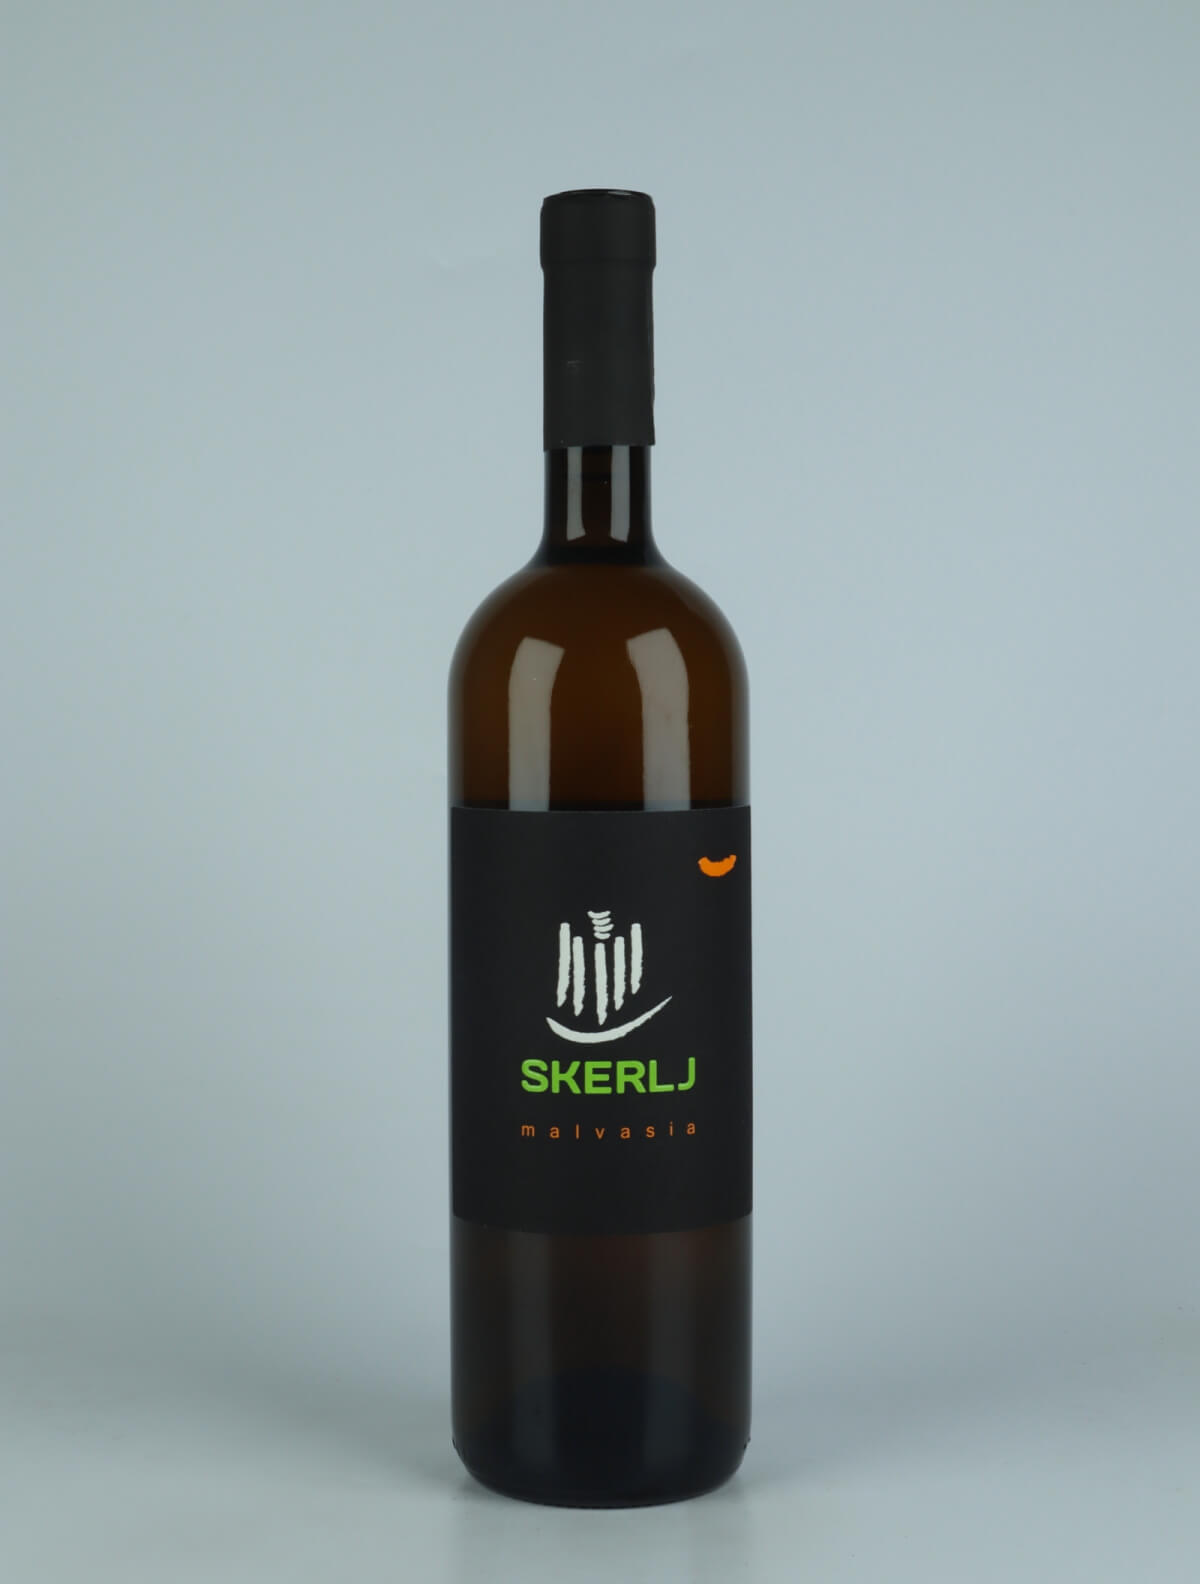 A bottle 2021 Malvasia Orange wine from Skerlj, Friuli in Italy